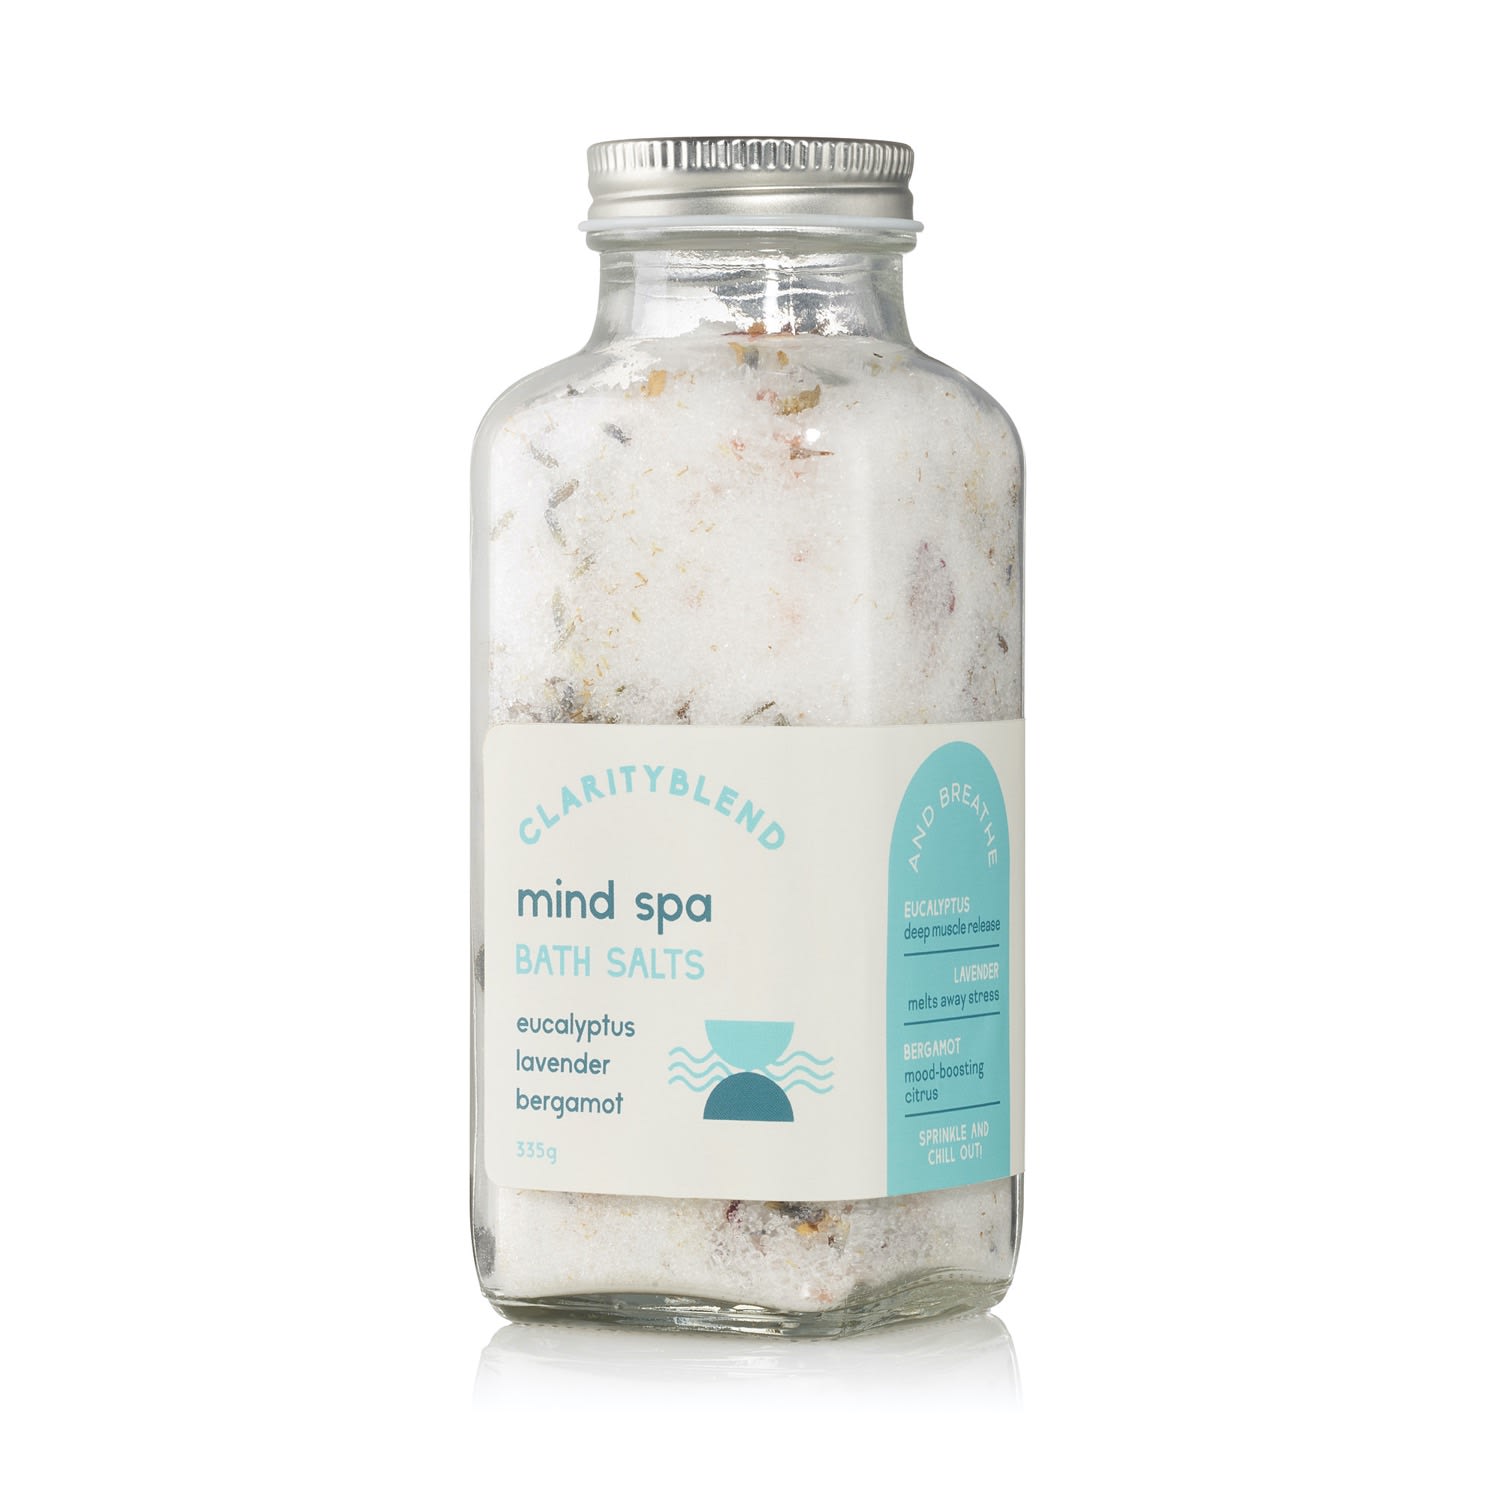 Mind Spa Bath Salts Clarity Blend Aromatherapy